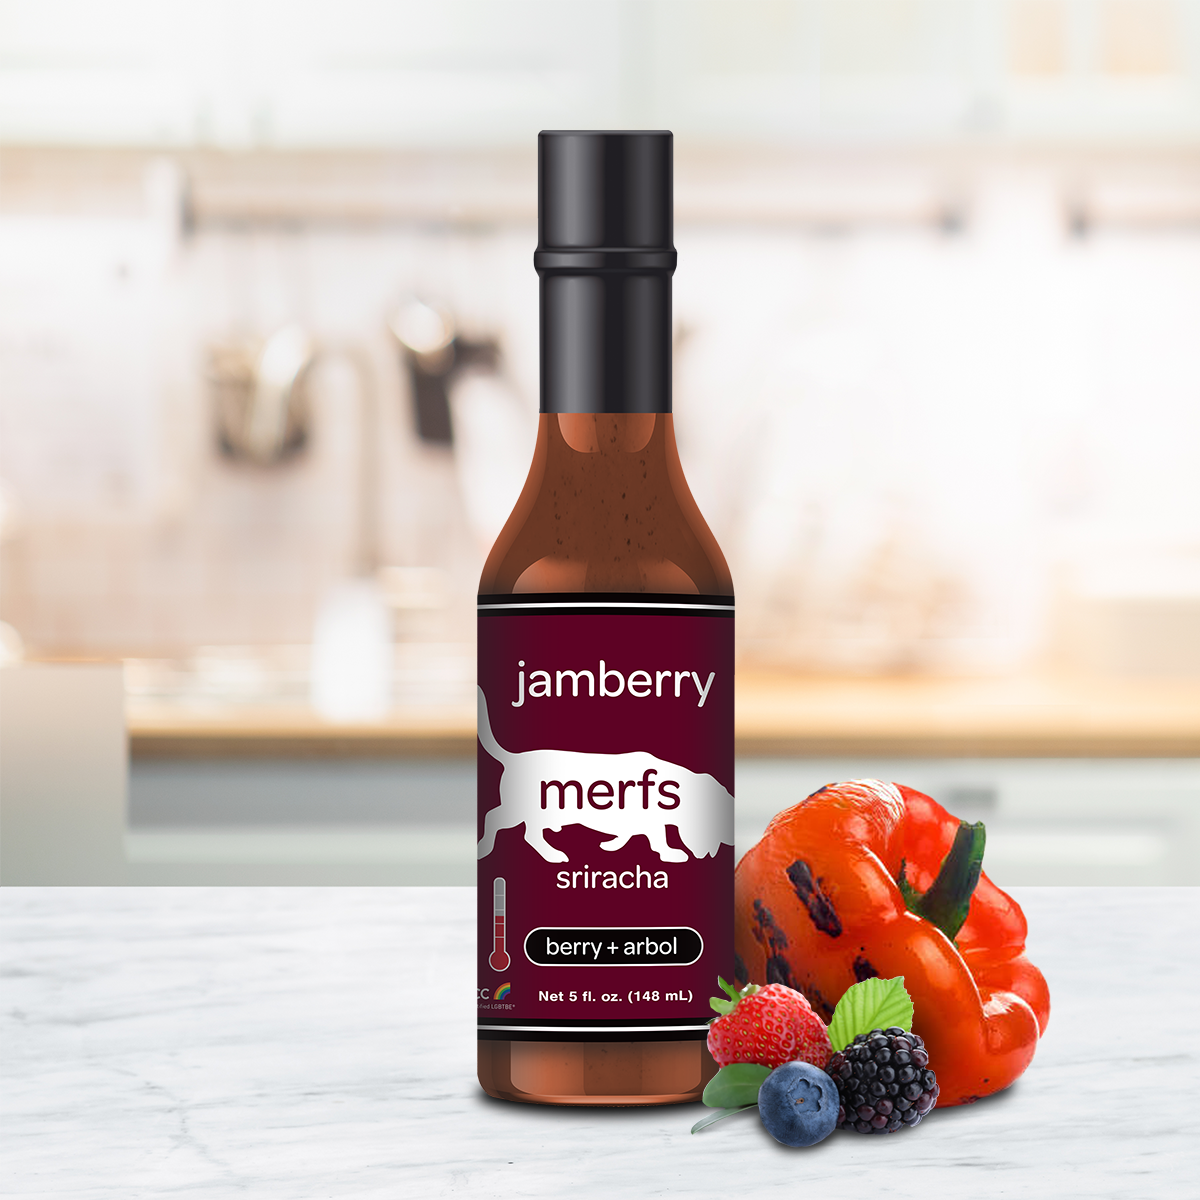 Jamberry Sriracha - Merfs Condiments